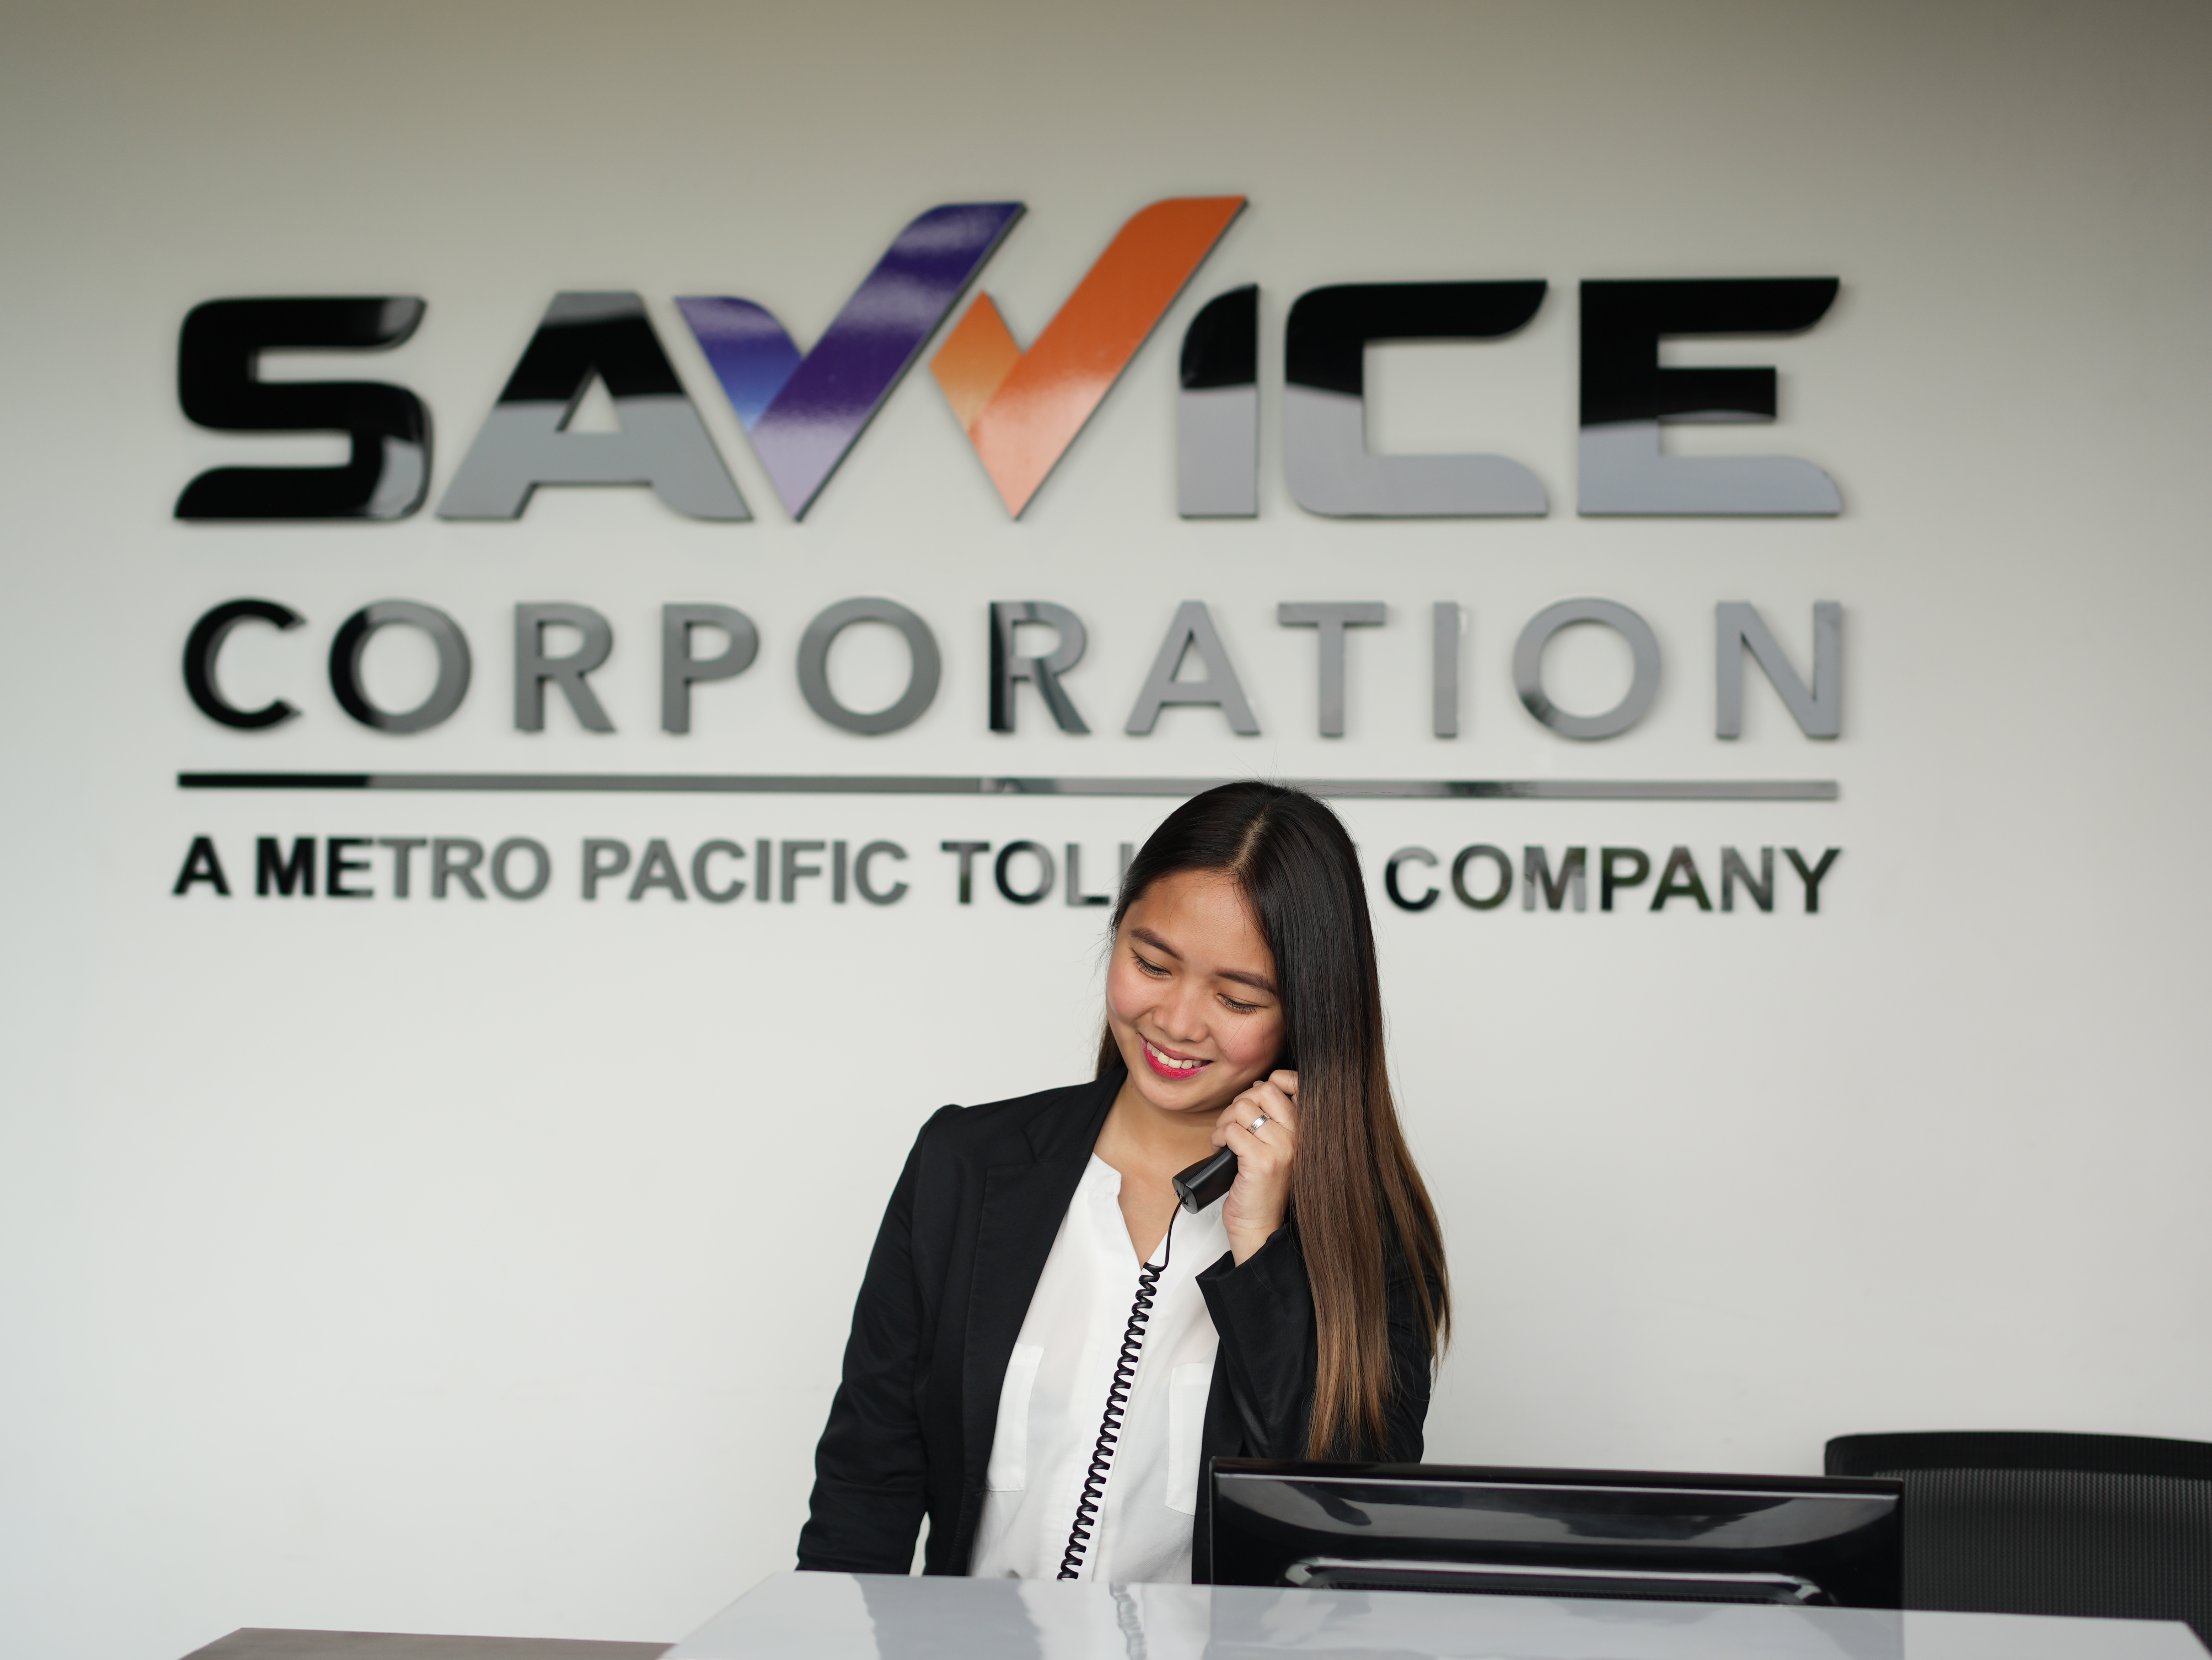 Operation Maintenance Services - Savvice Corporation